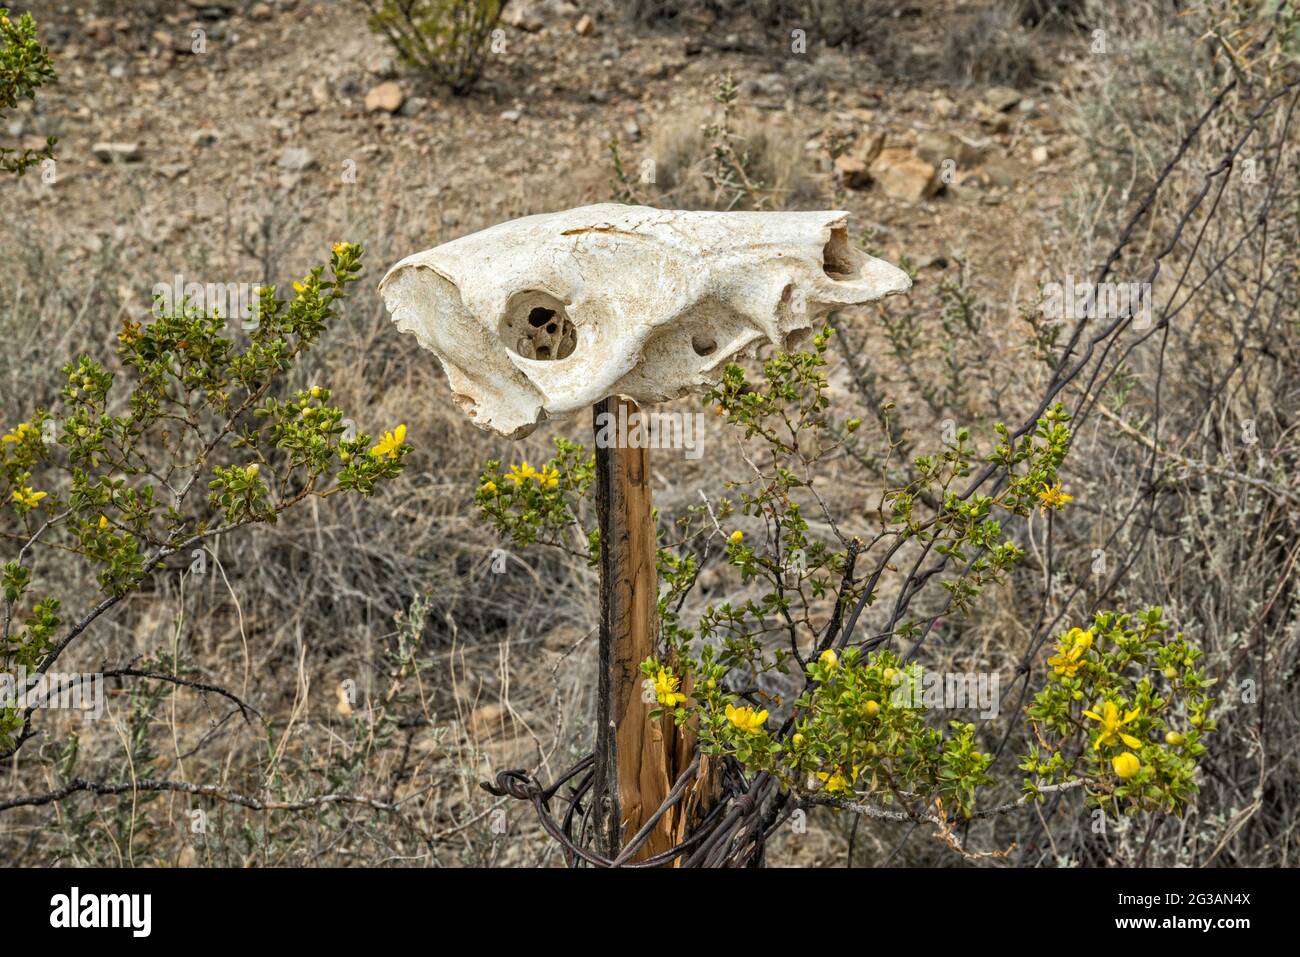 Animal skull, creosote bush in bloom, at McGuirks Tanks campsite, El Solitario area, Big Bend Ranch State Park, Texas, USA Stock Photo